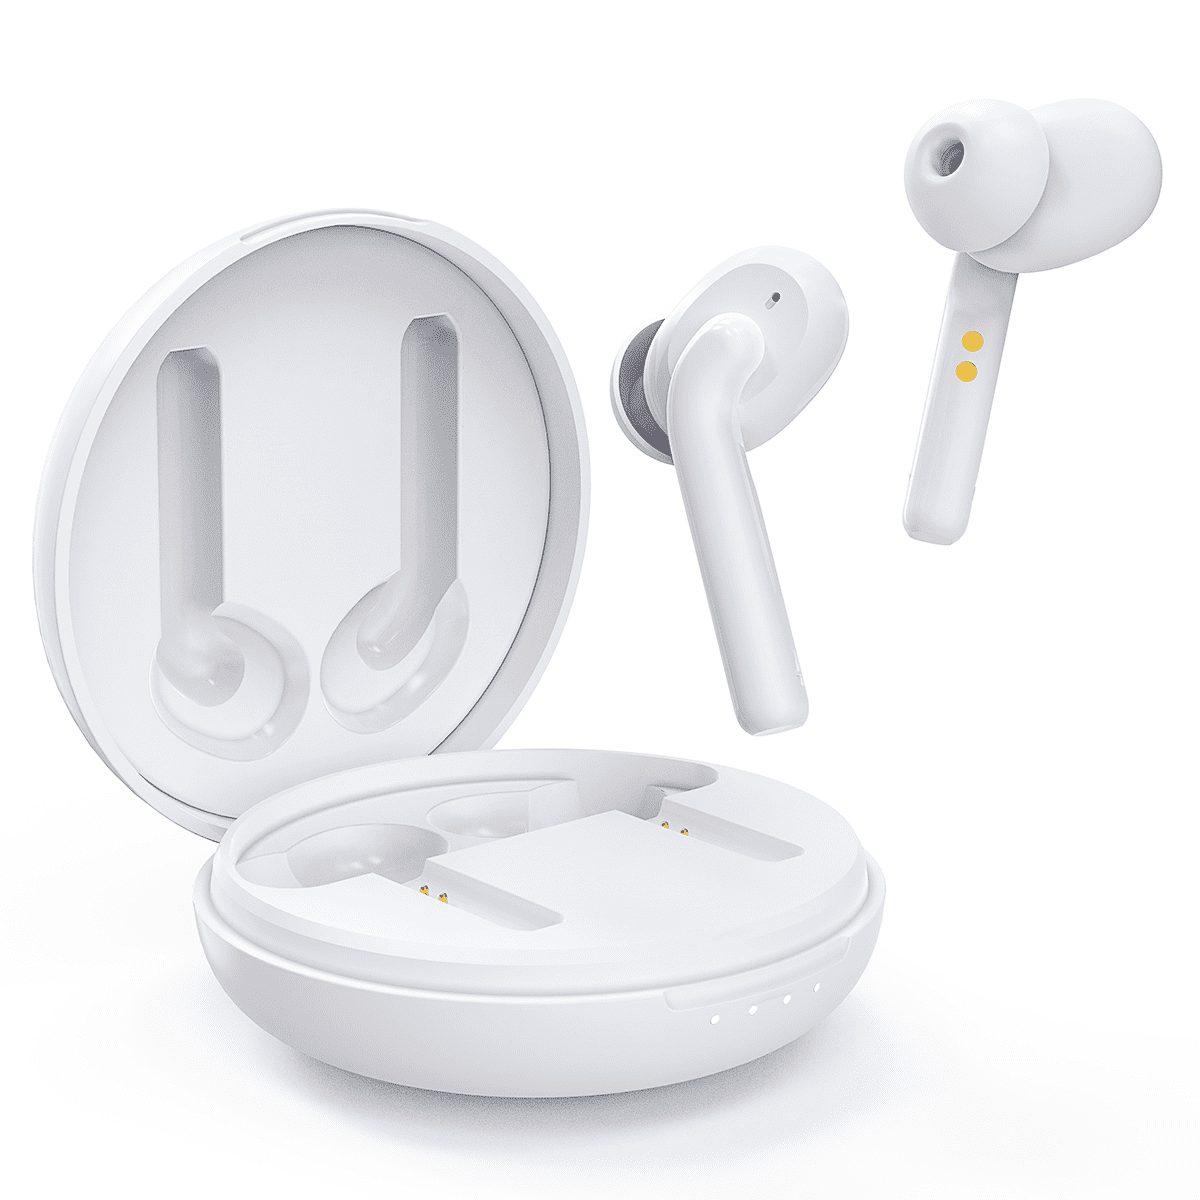 Wireless Earbuds Bluetooth 5.1 Earphones CVC8.0 Noise Control headphones IPX7 Waterproof wireless earphones with LED Display Quick Charging Case Dual Driver Speakers Stereo Headphones